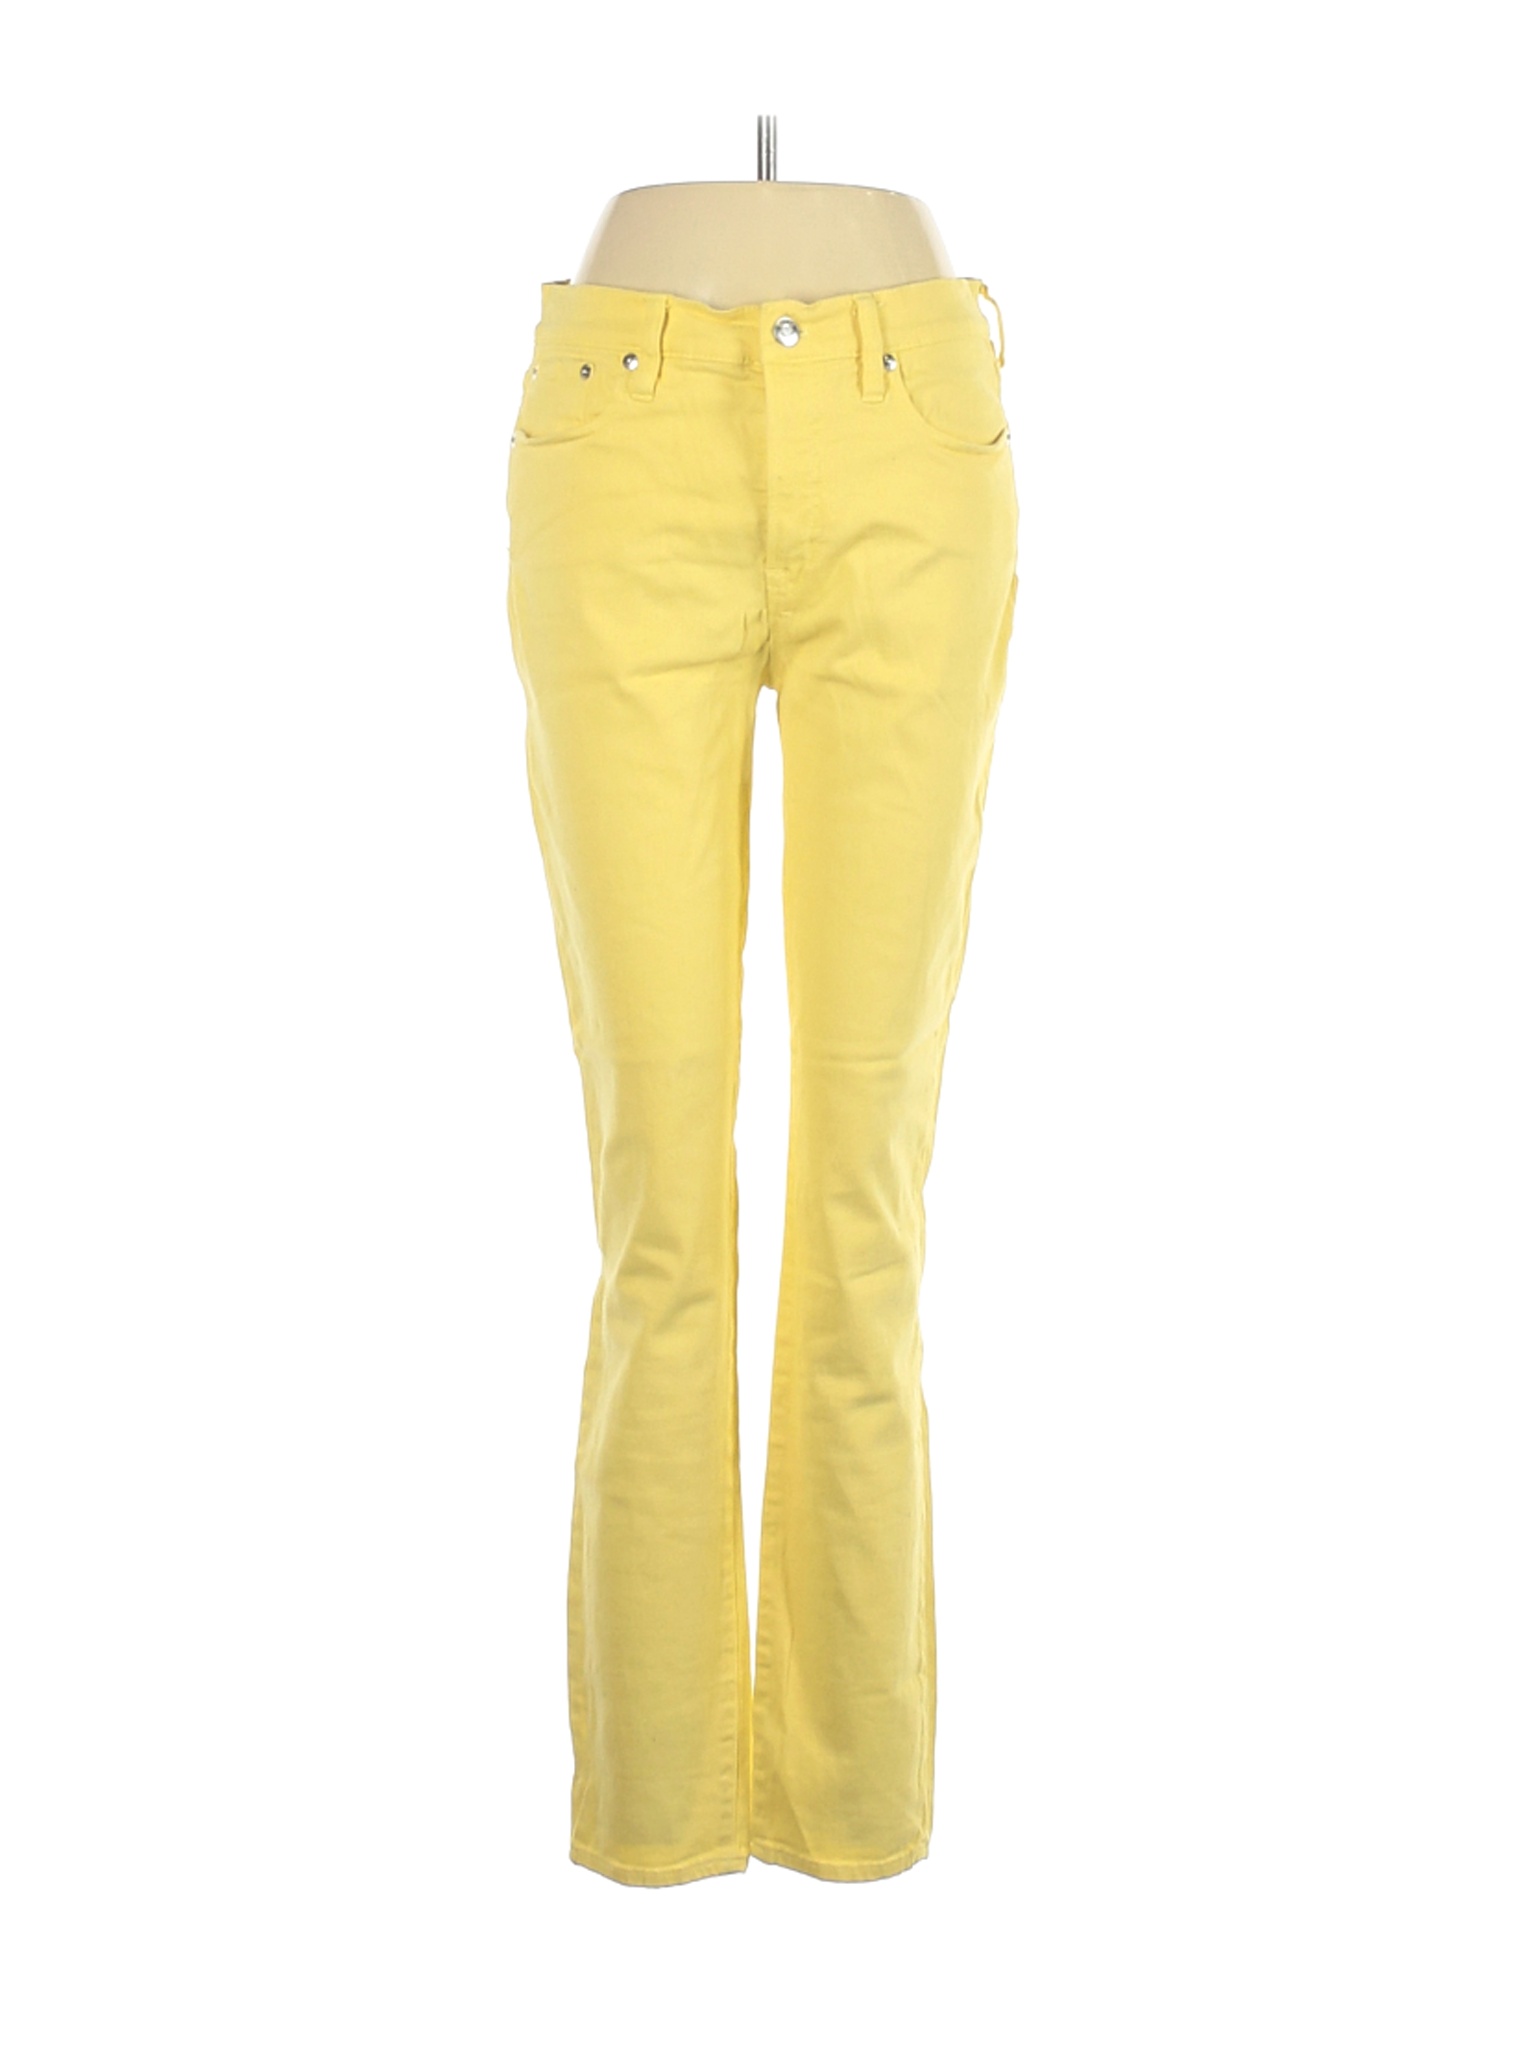 J.Crew Women Yellow Jeans 29 W Tall | eBay